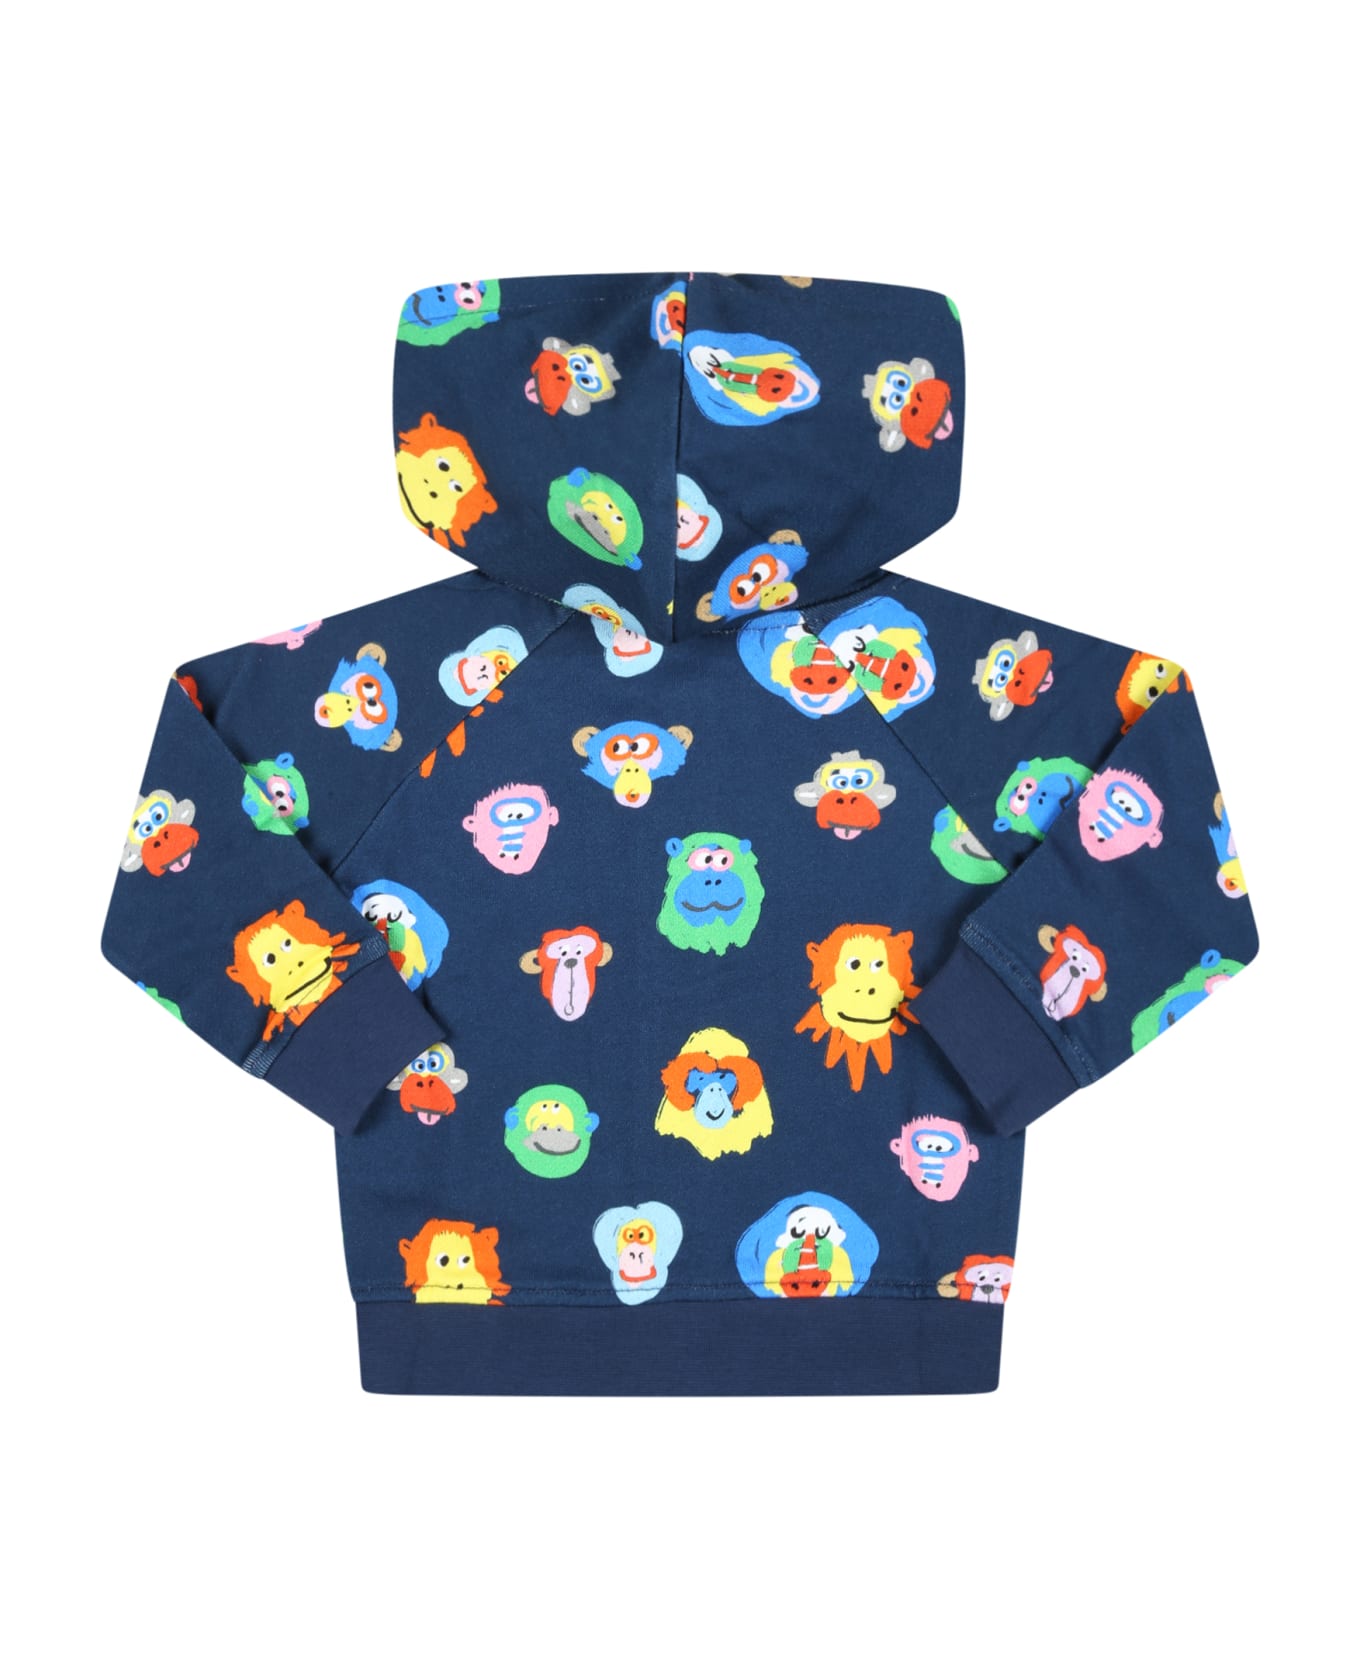 Stella McCartney Kids Blue Sweatshirt For Baby Boy With Animals - Blue